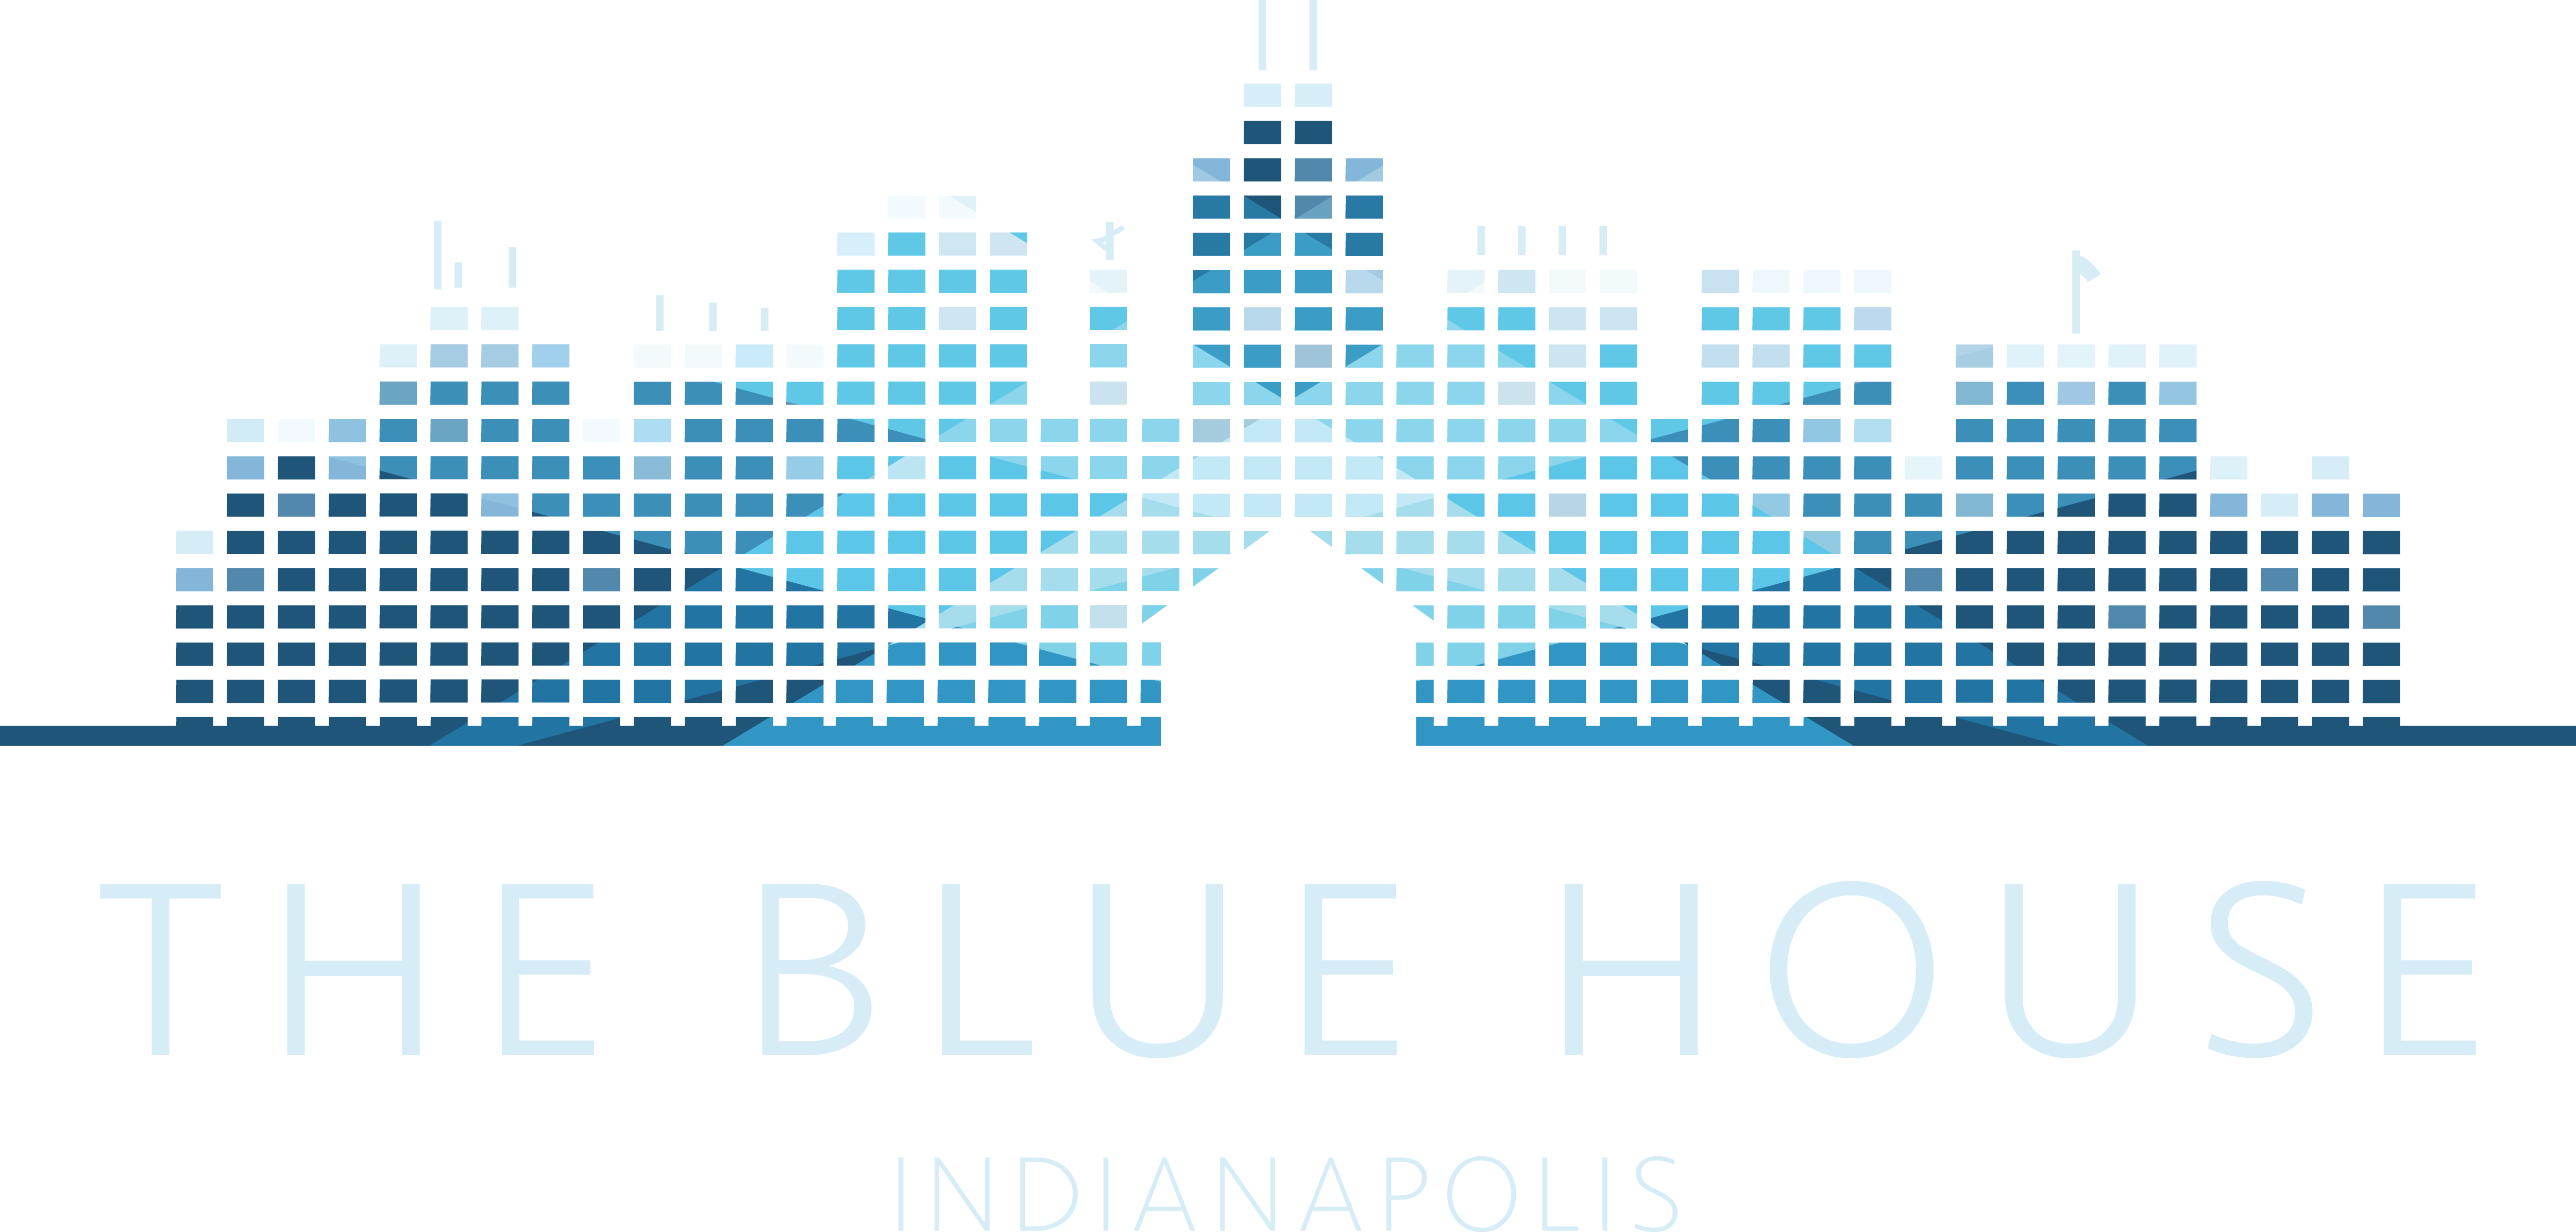 Blue House Logo - The Blue House | Where entrepreneurship, art, and technology meet